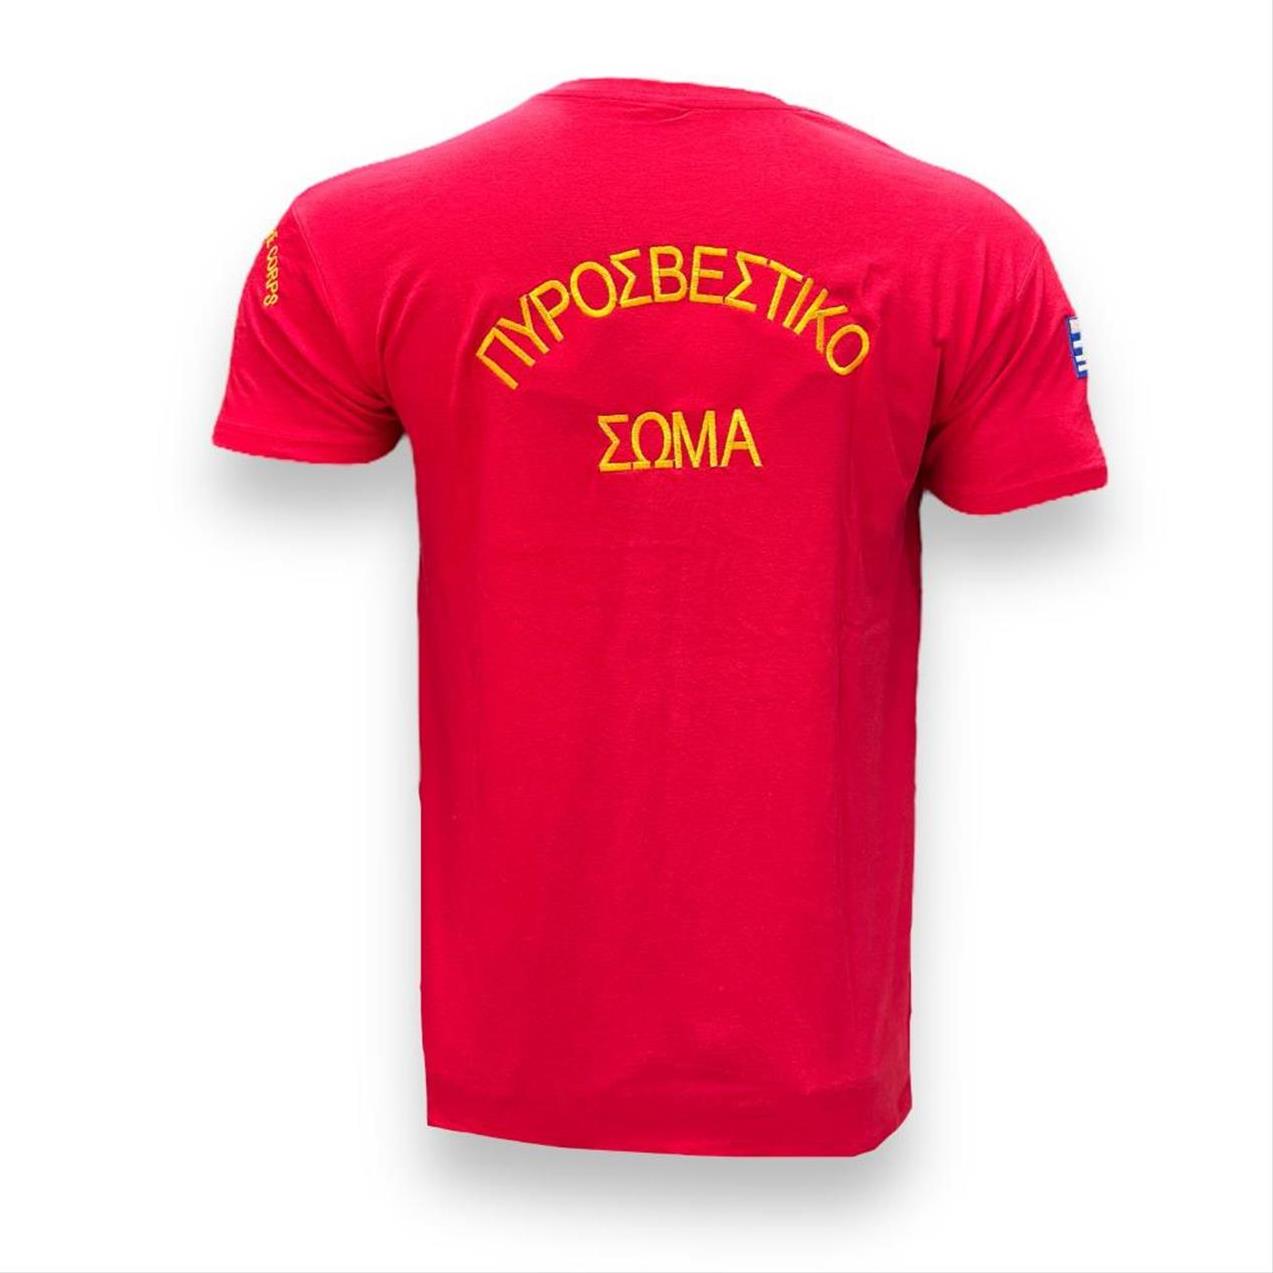 mployza-T-Shirt-pyrosvestiko-soma-Red--Greek-Forces